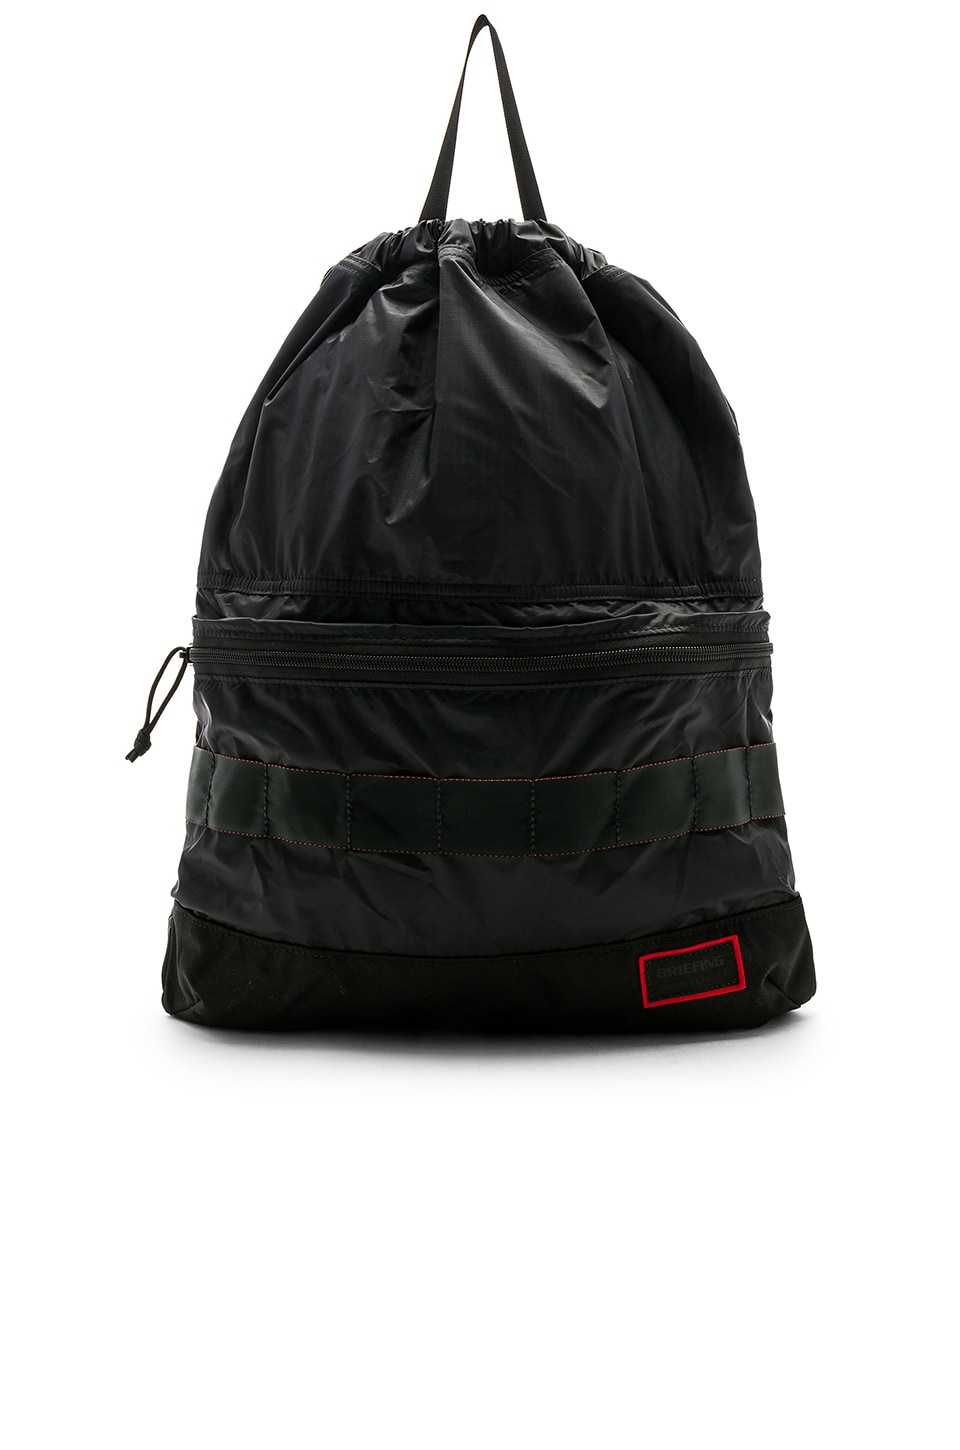 JOHN ELLIOTT x Briefing 2 in 1 Backpack in Black | REVOLVE